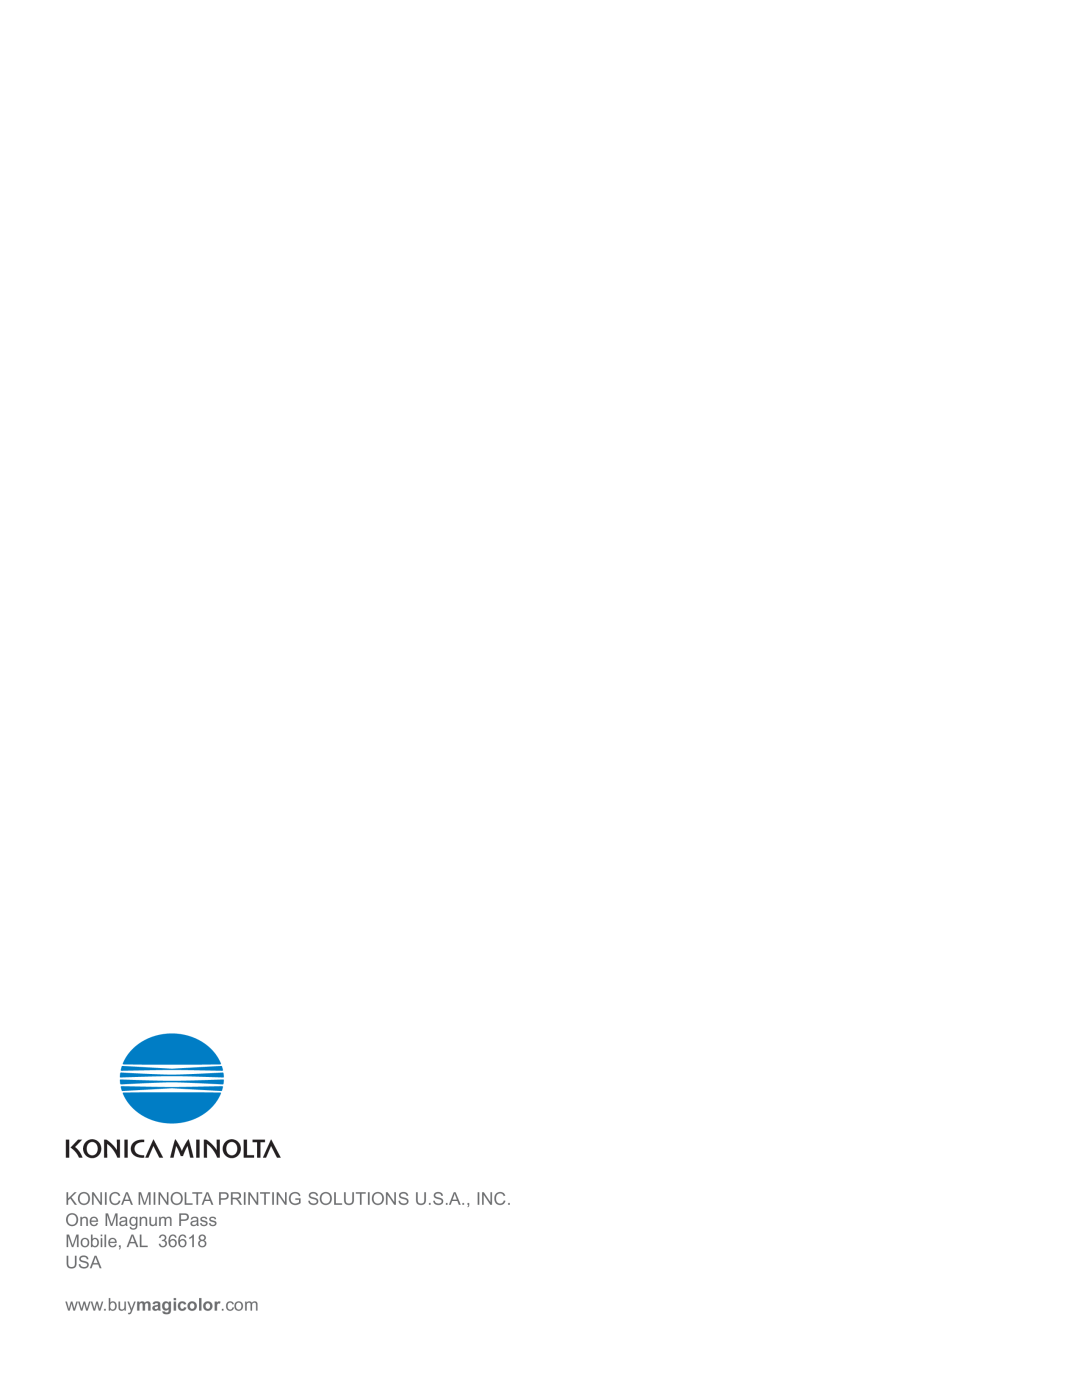 Konica Minolta 5440 DL manual Konica Minolta Printing Solutions U.S.A., Inc, One Magnum Pass Mobile, AL USA 